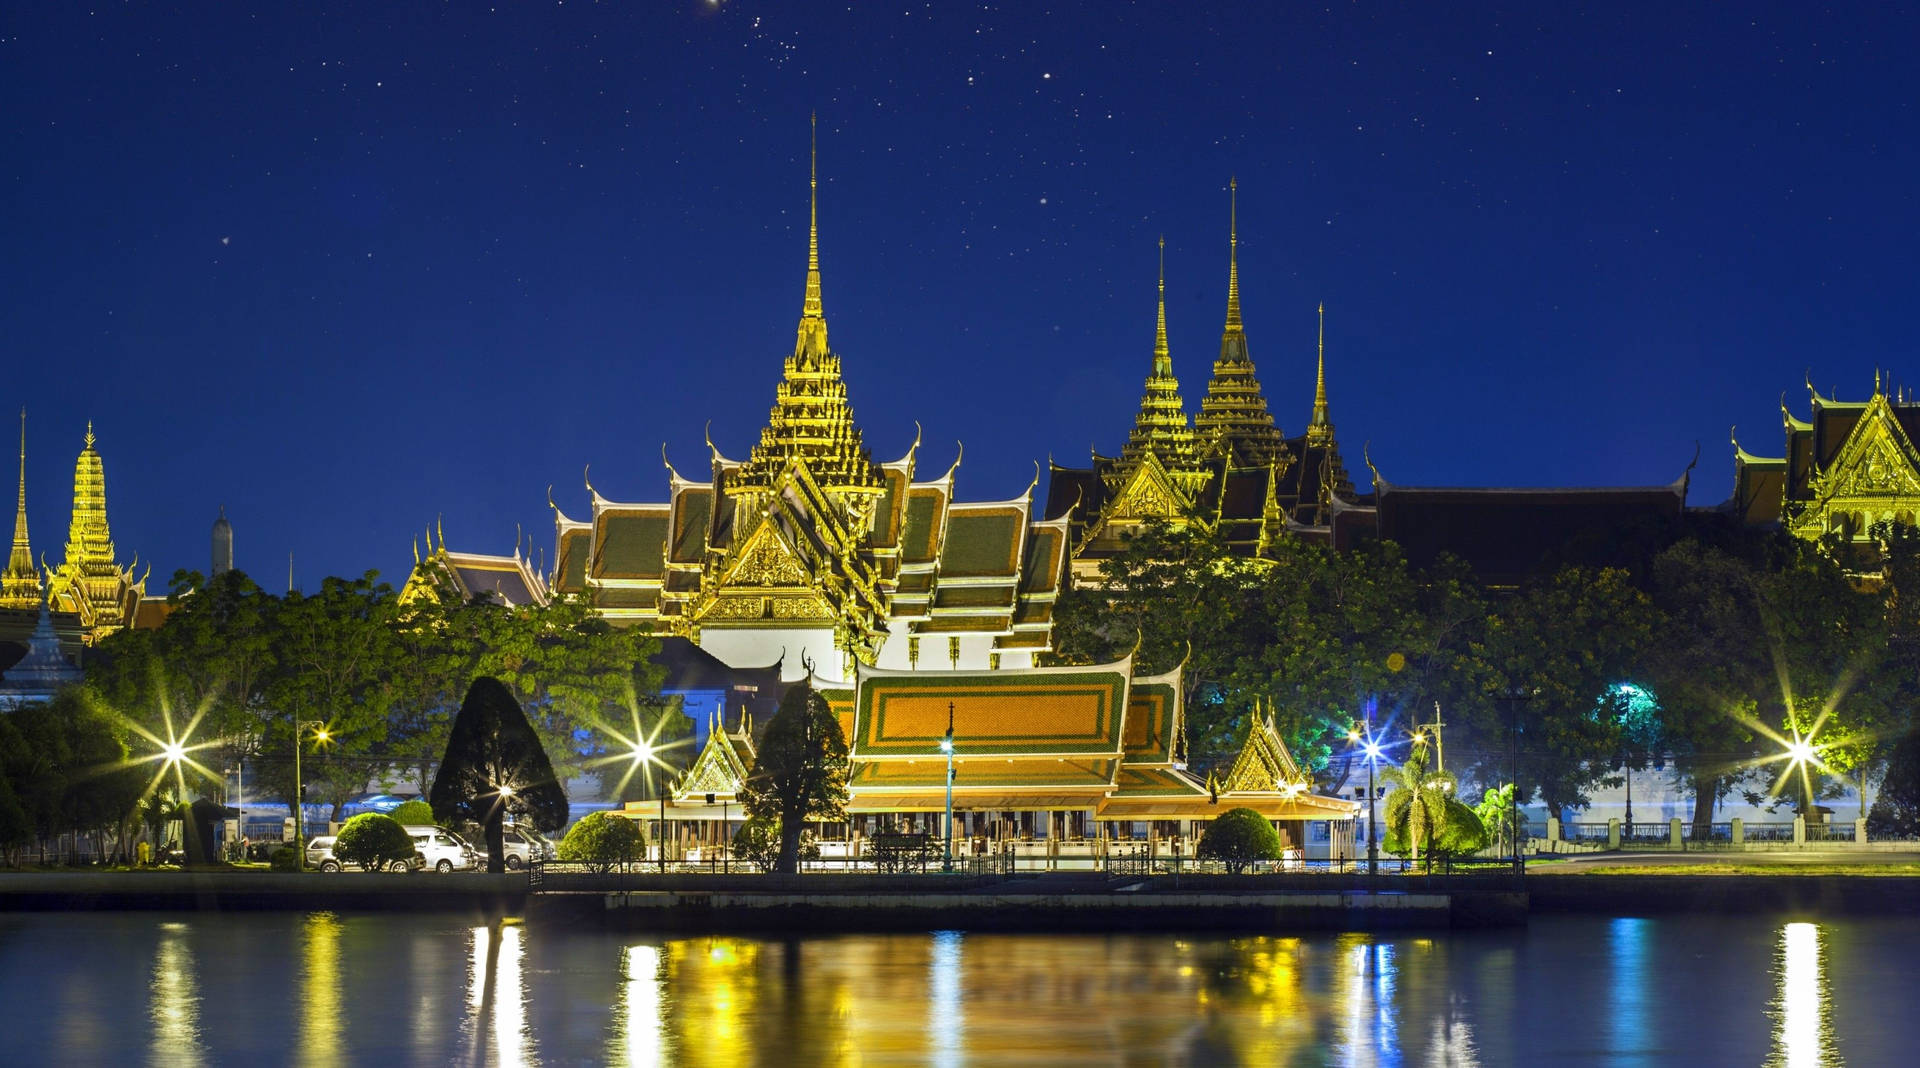 Bangkok's Palace And River Background